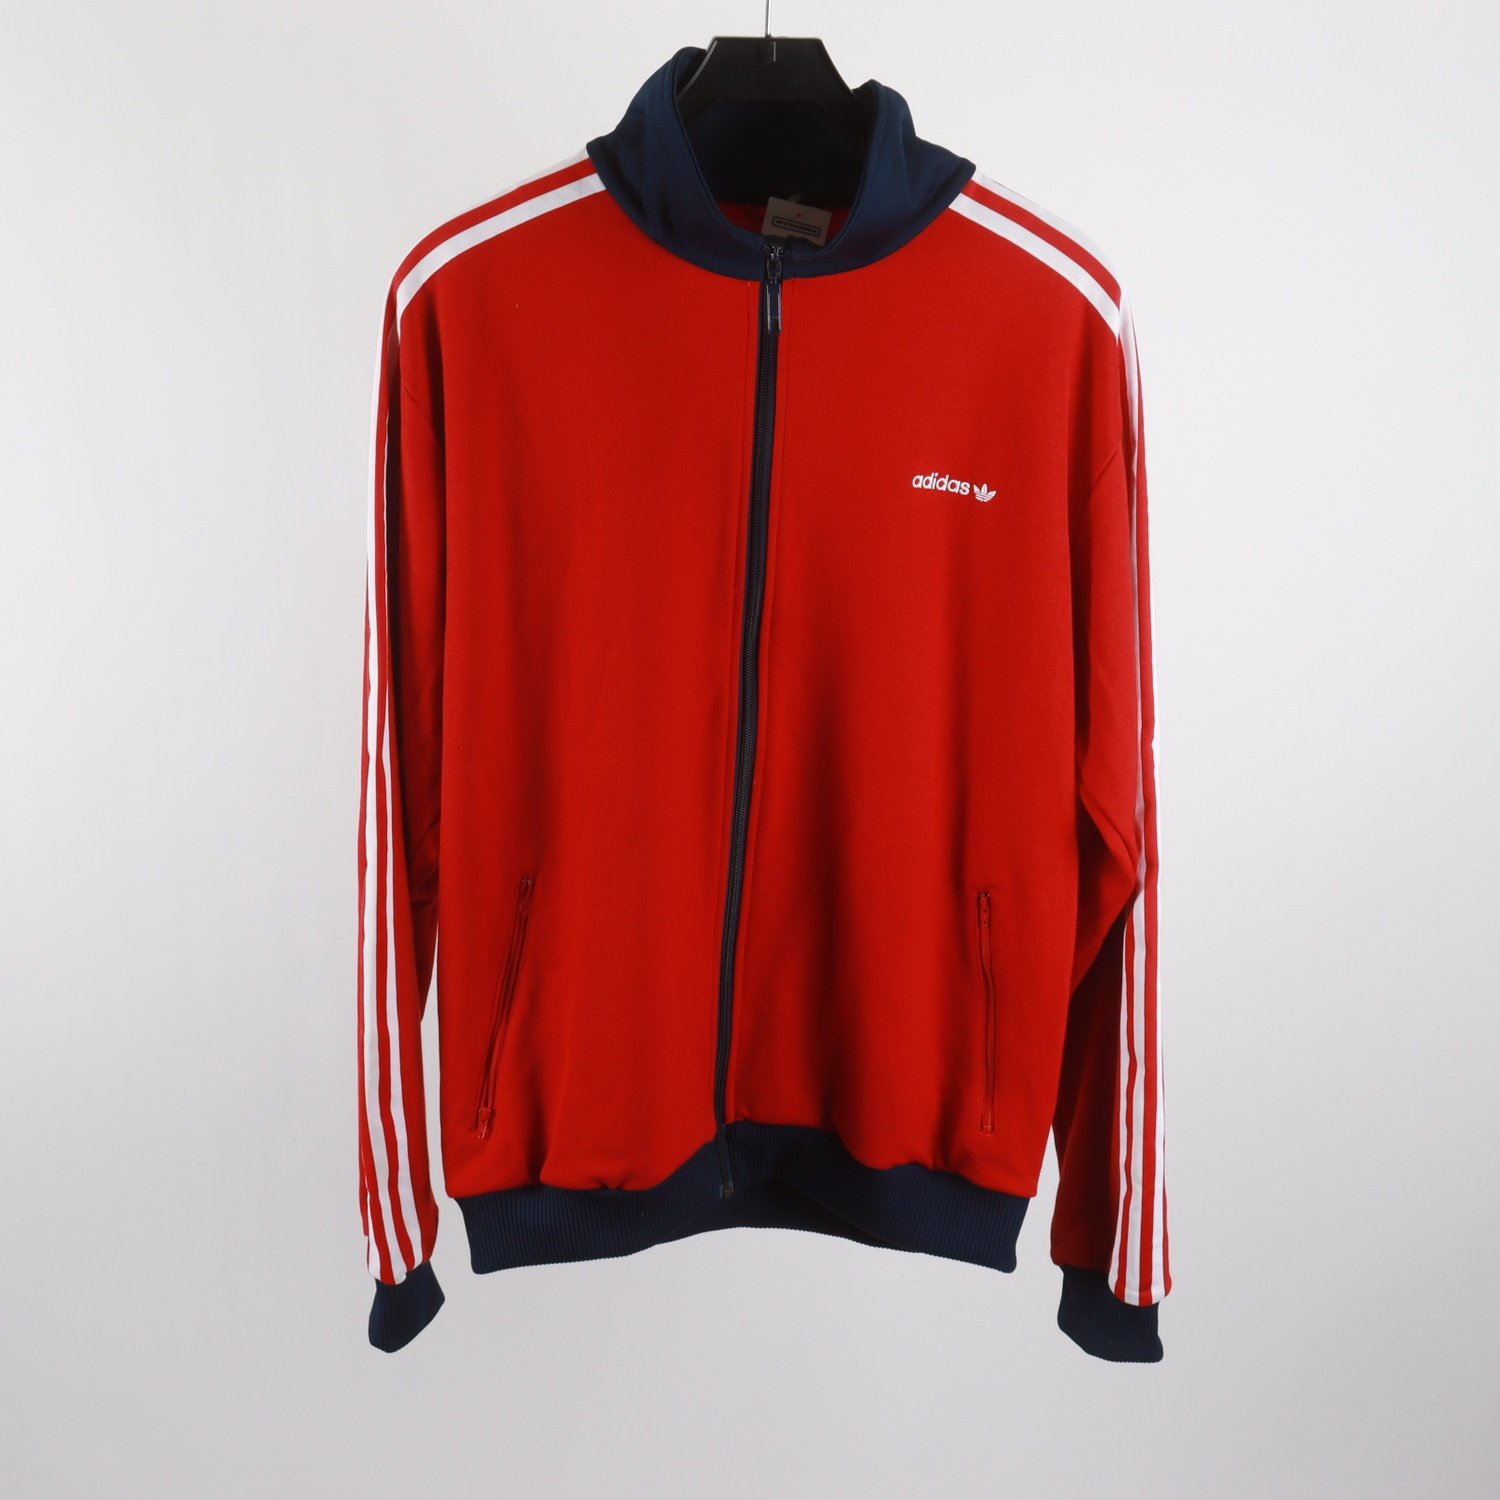 Sportjacka, Adidas, röd, stl. XL